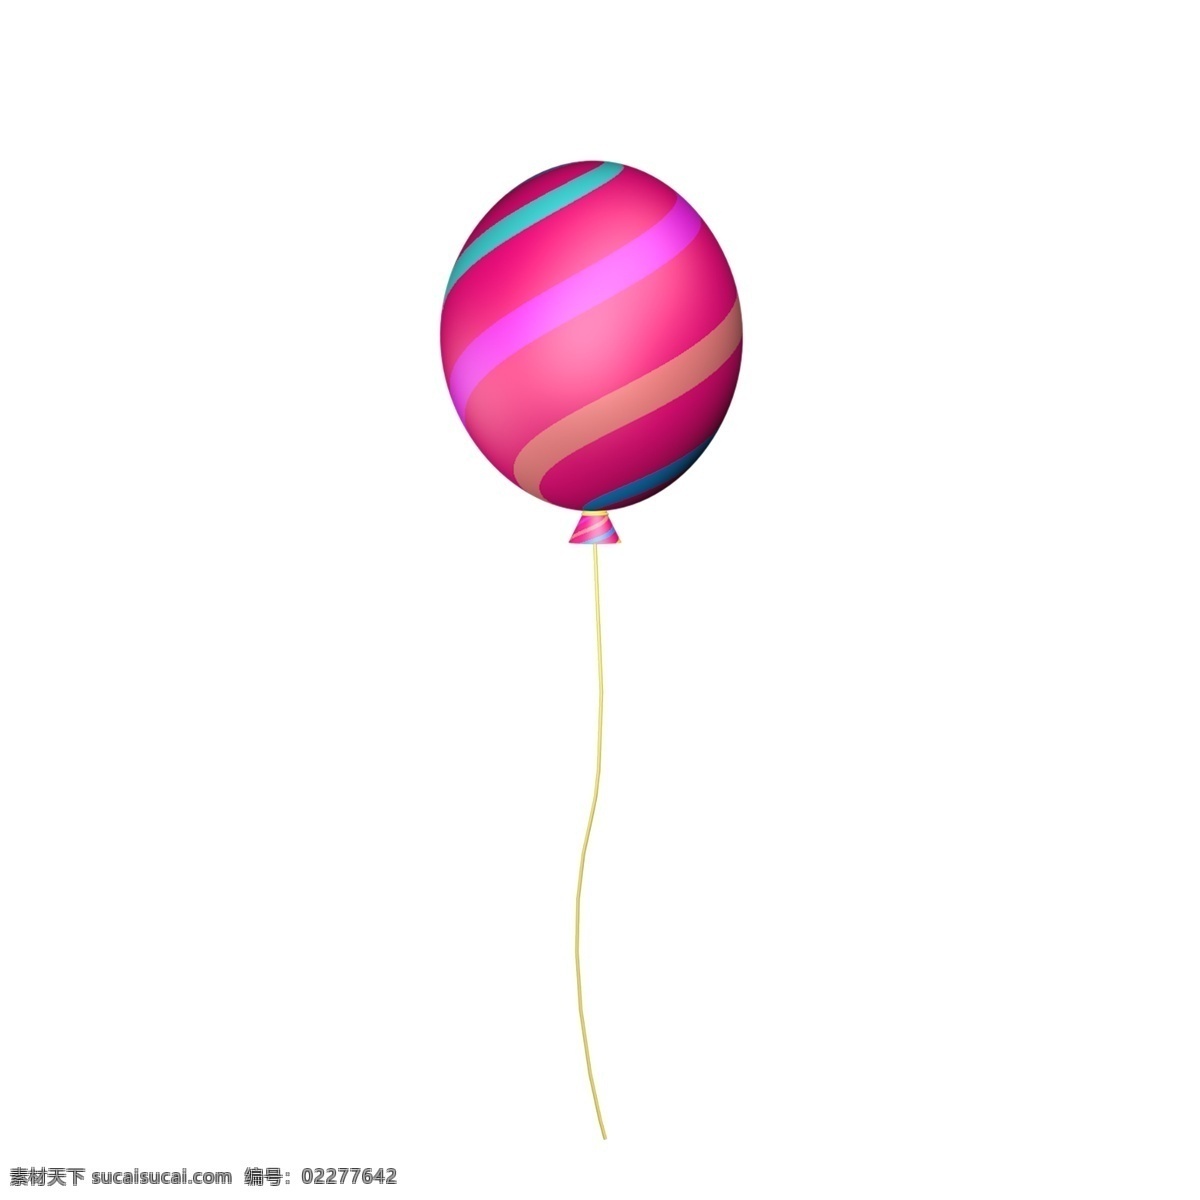 c4d 气球 七夕 元素 3d 渐变 粉色 原创 商用 c4d气球 七夕元素 3d气球 渐变粉色 c4d元素